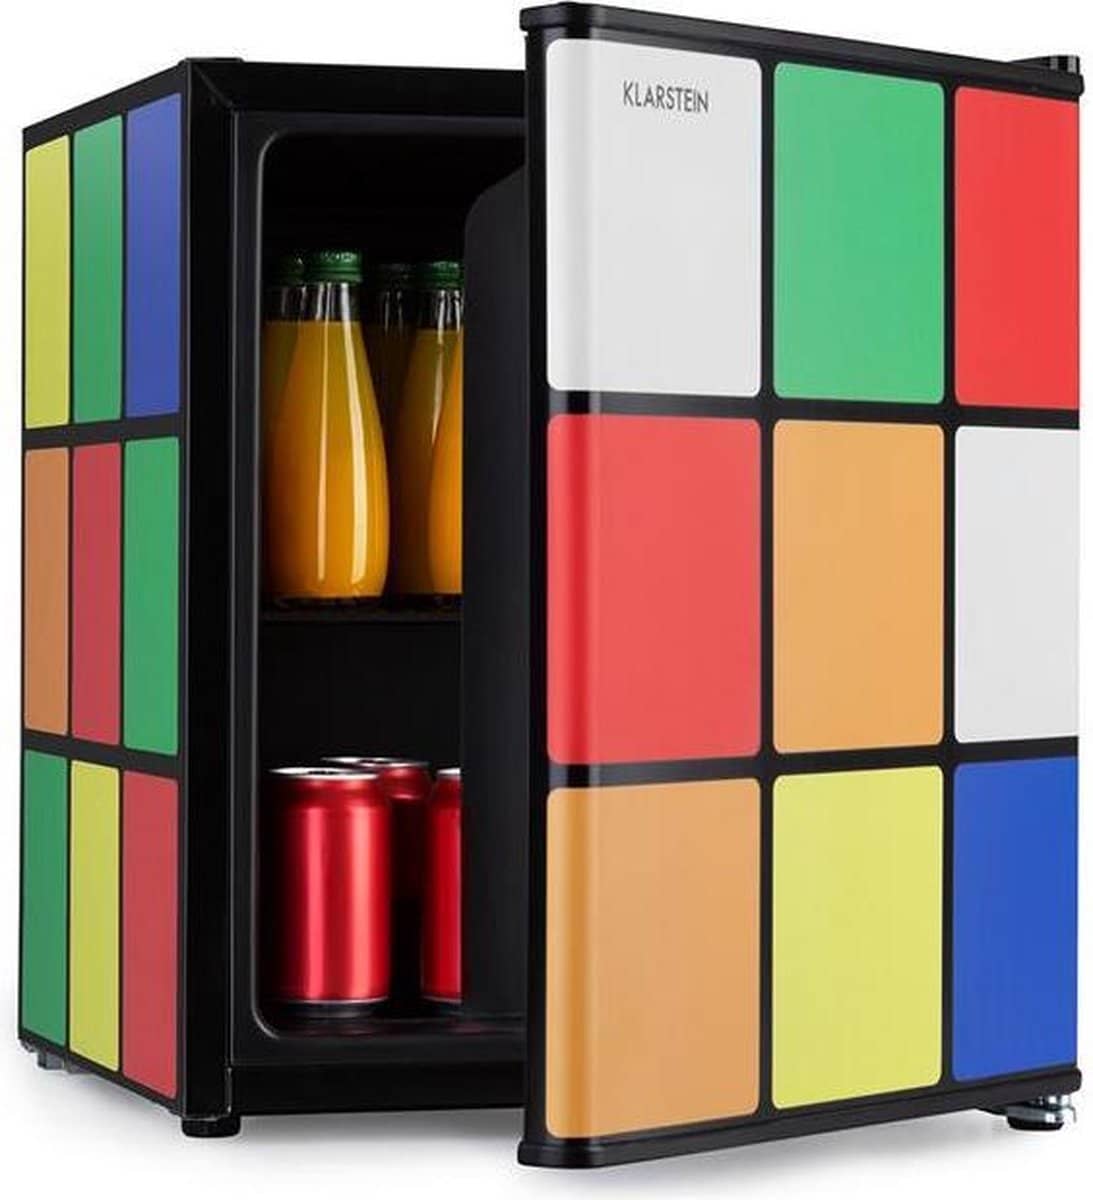 Klarstein Solve koelkast. Rubiks Kube design